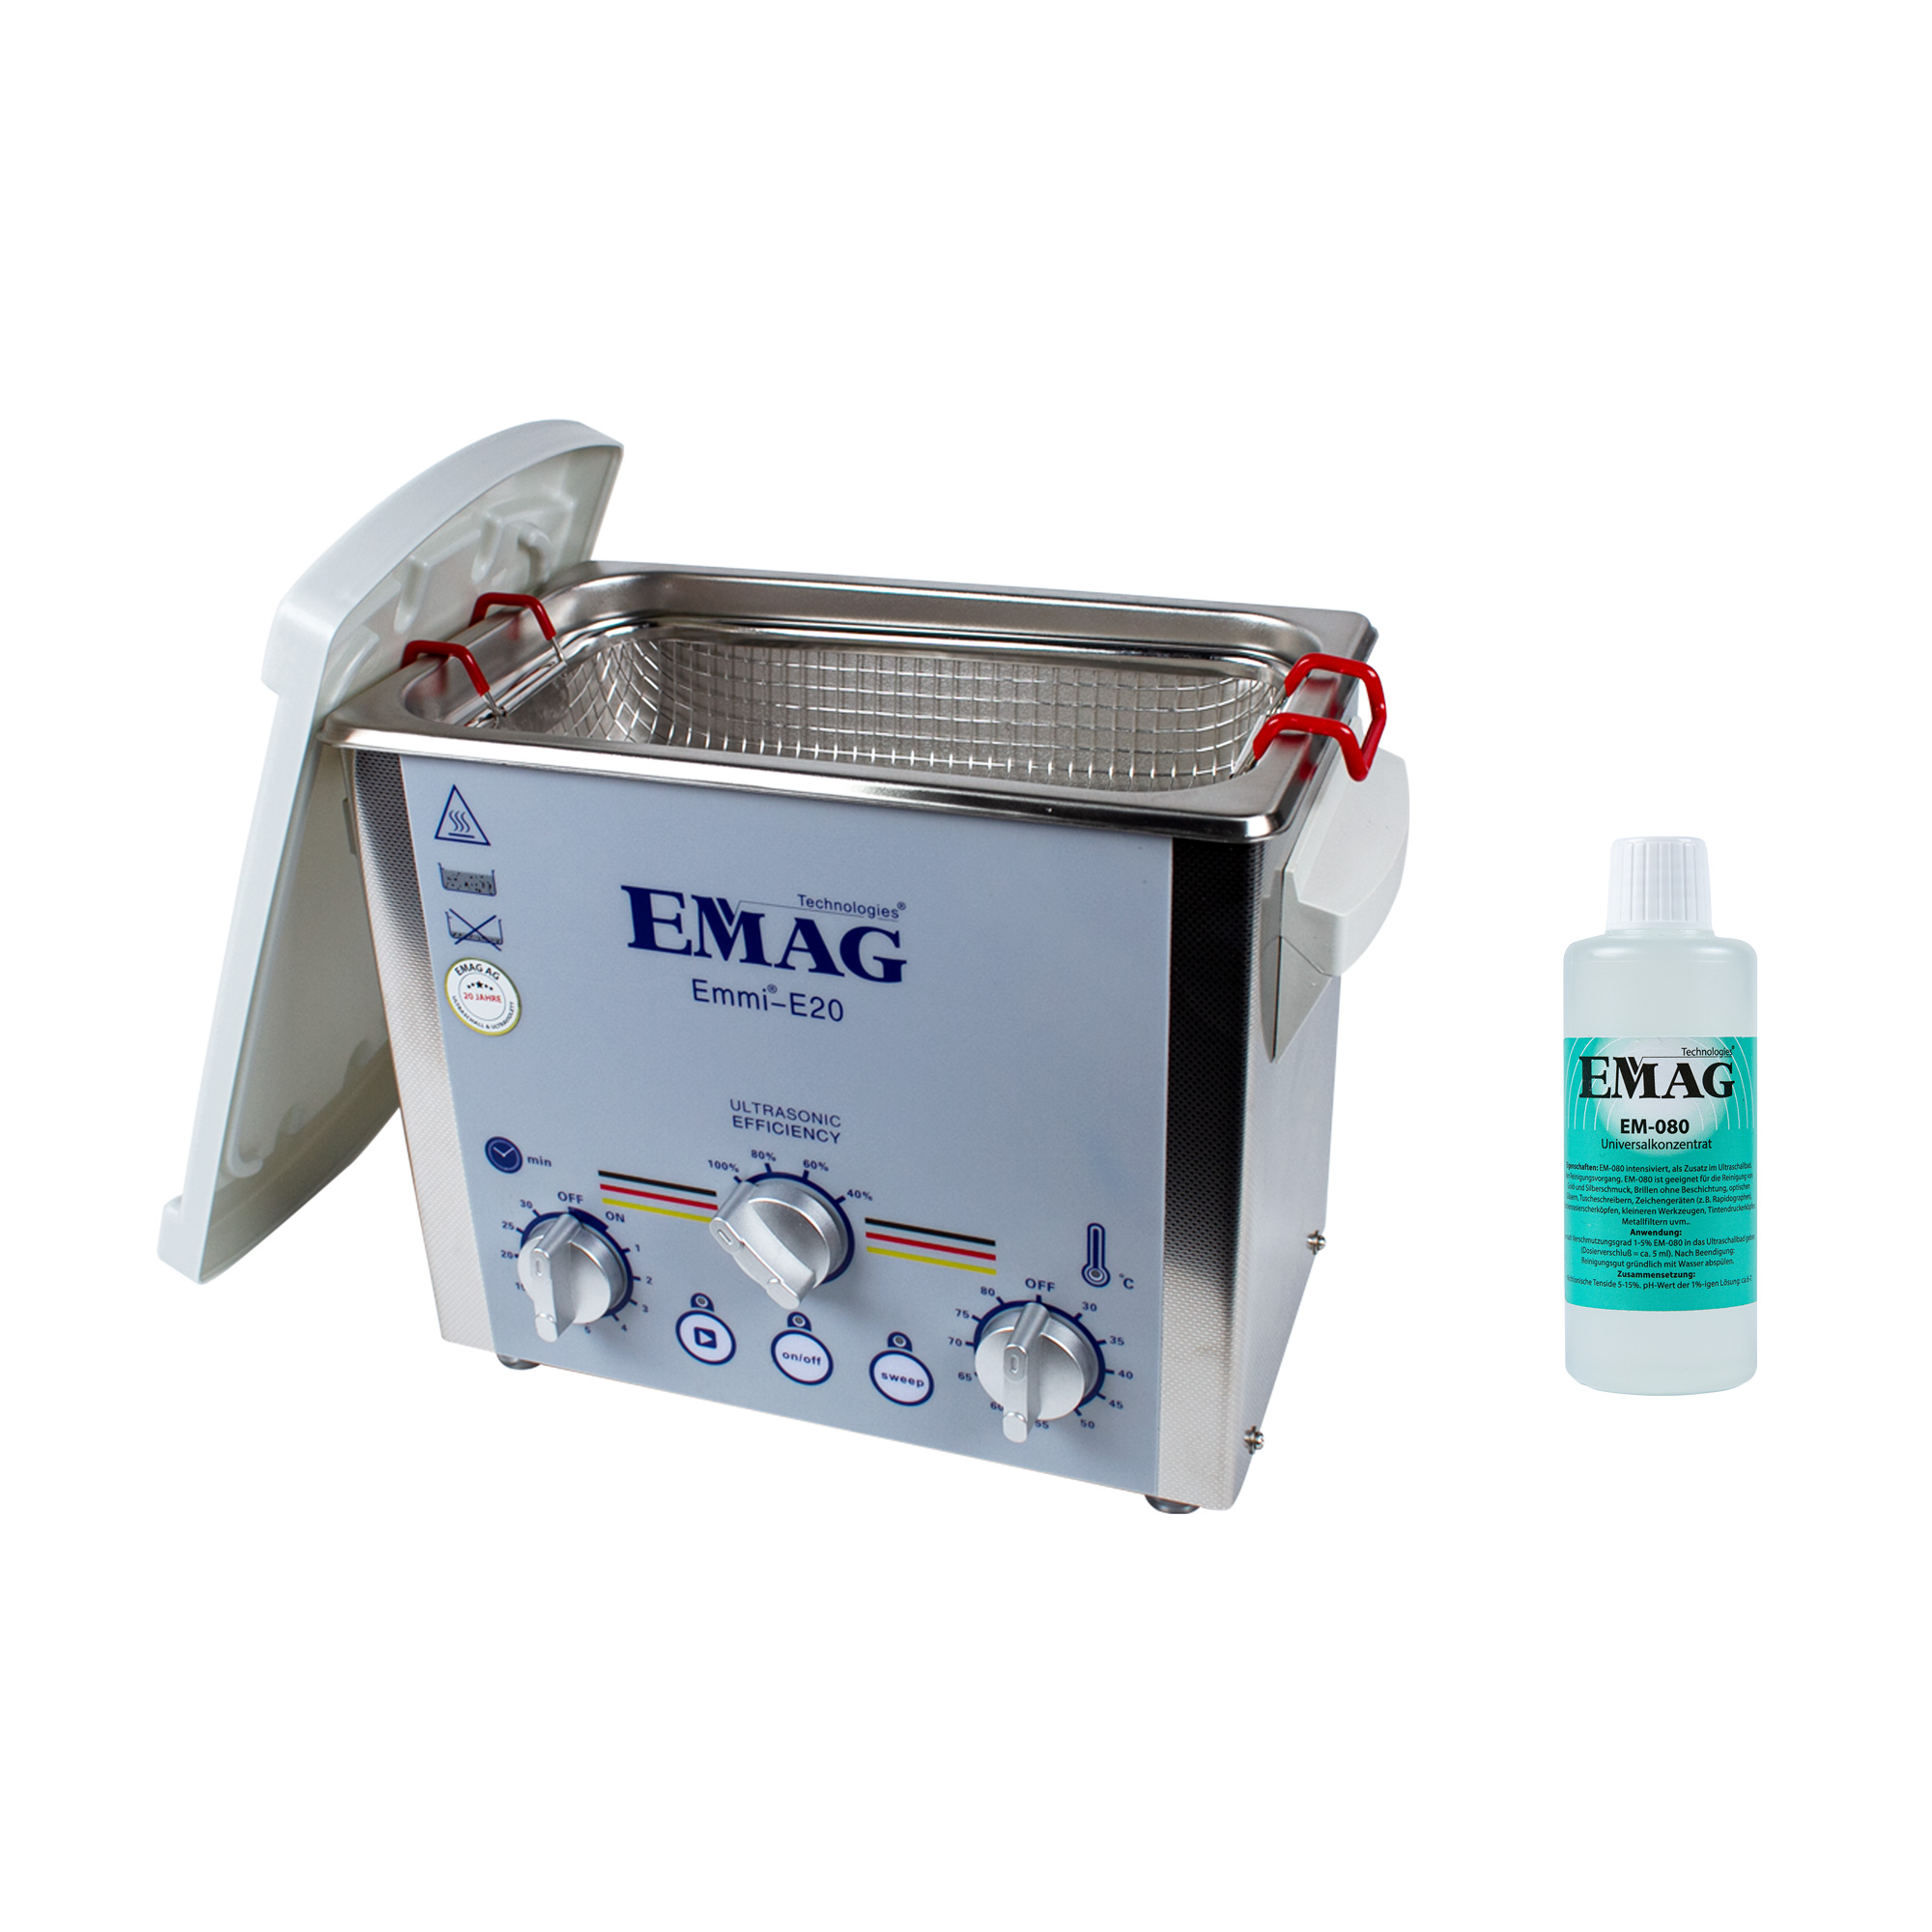 EMAG emmi® E20 Ultraschallreiniger Edelstahl Ultraschallreinigungsgerät